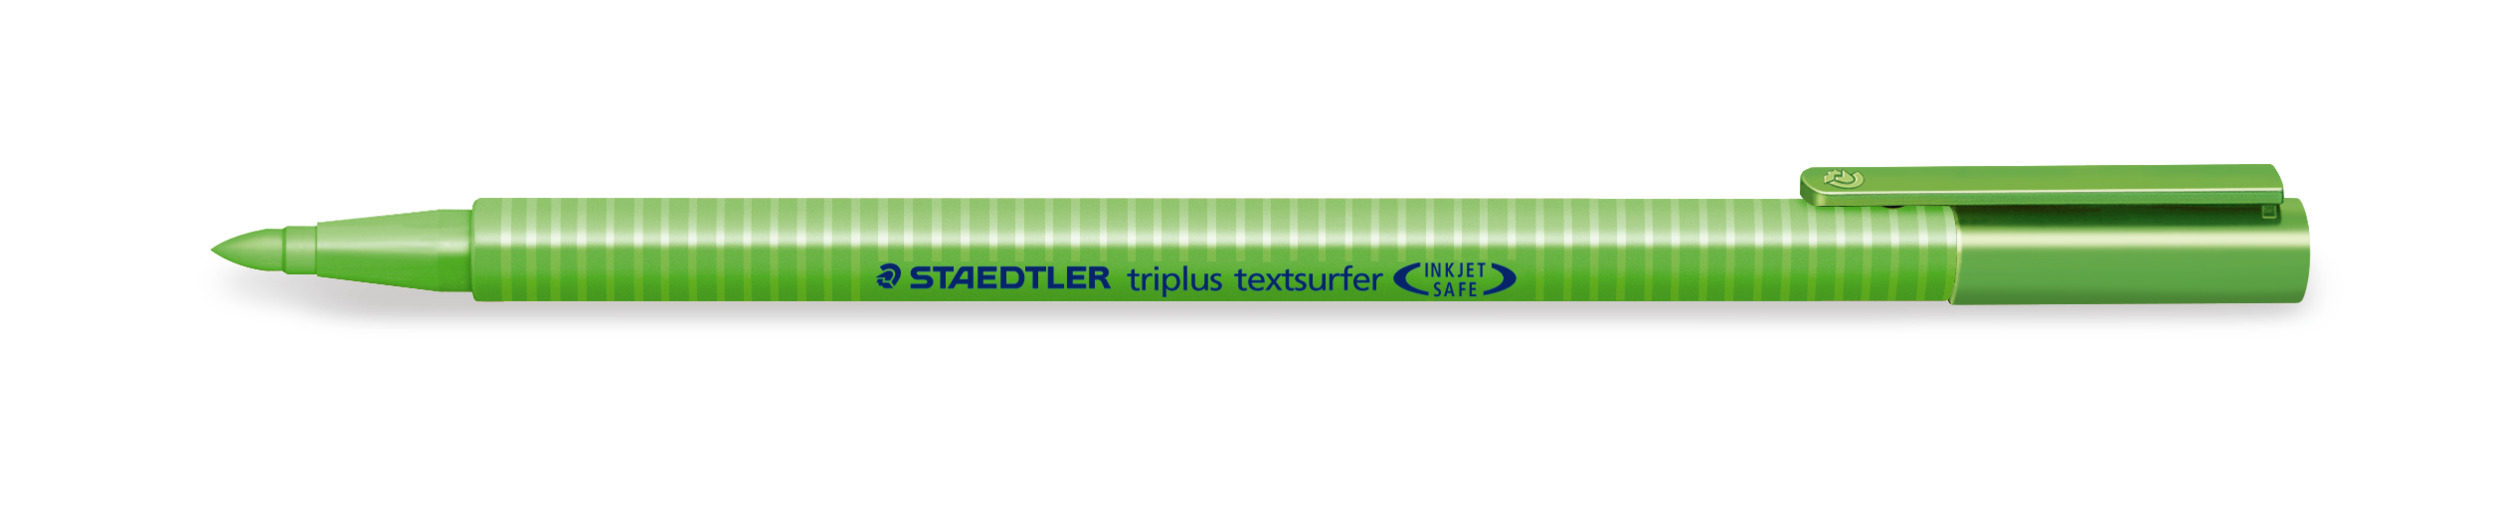 Triplus Textsurfer 362 Markeerstift 1 - 4 mm Groen